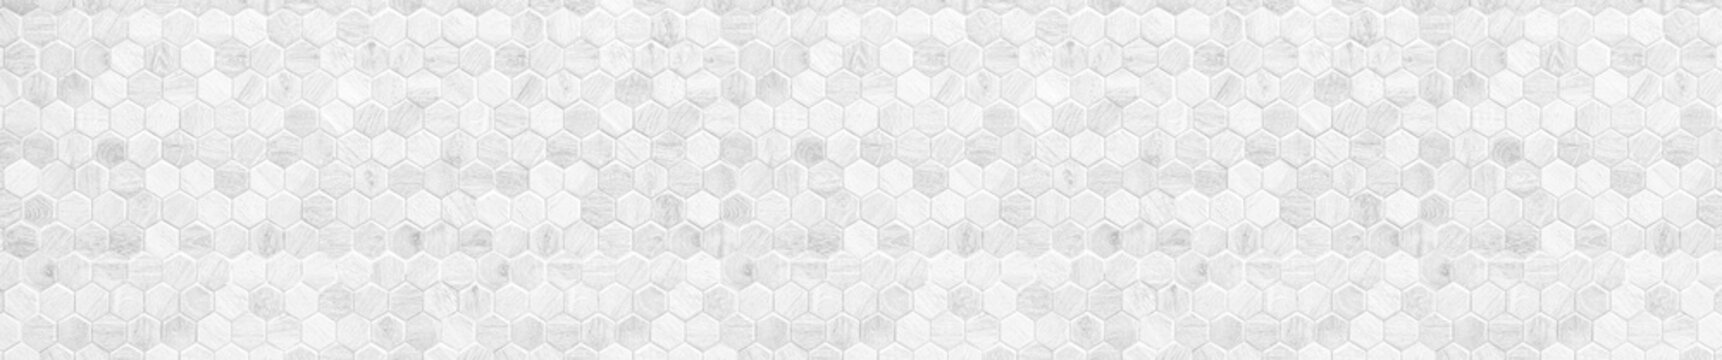 Fototapeta Honeycomb patterned wood panels in hexagonal shape, wood, blackground, abstract brown pattern